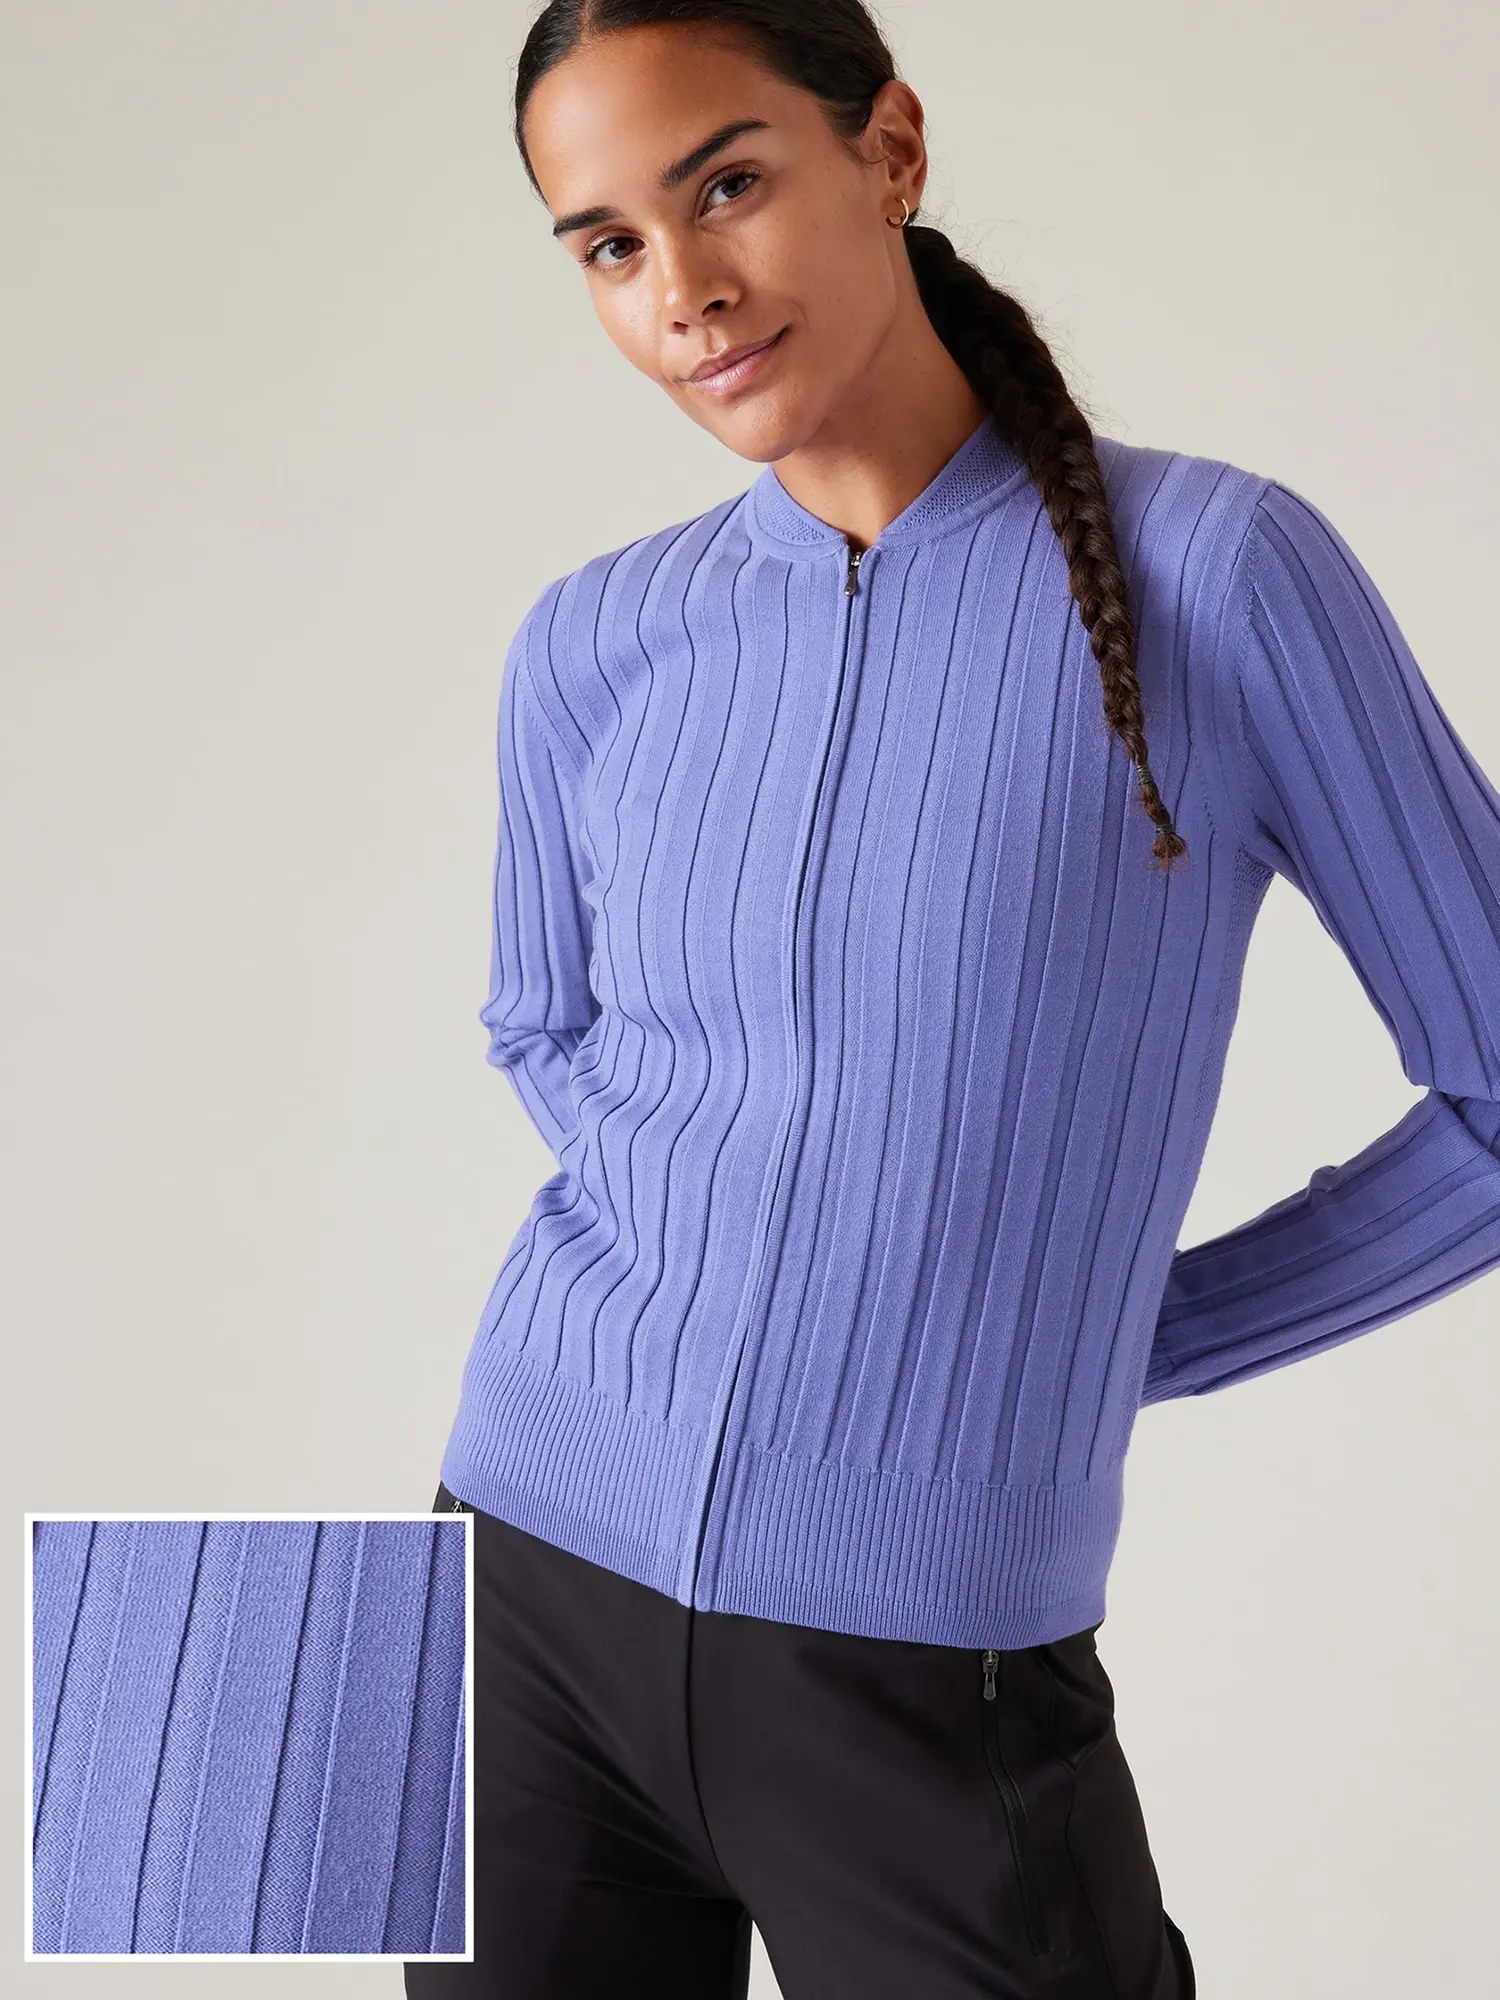 Fitted Striped Sleeveless Rib-Knit Midi Sweater Dress